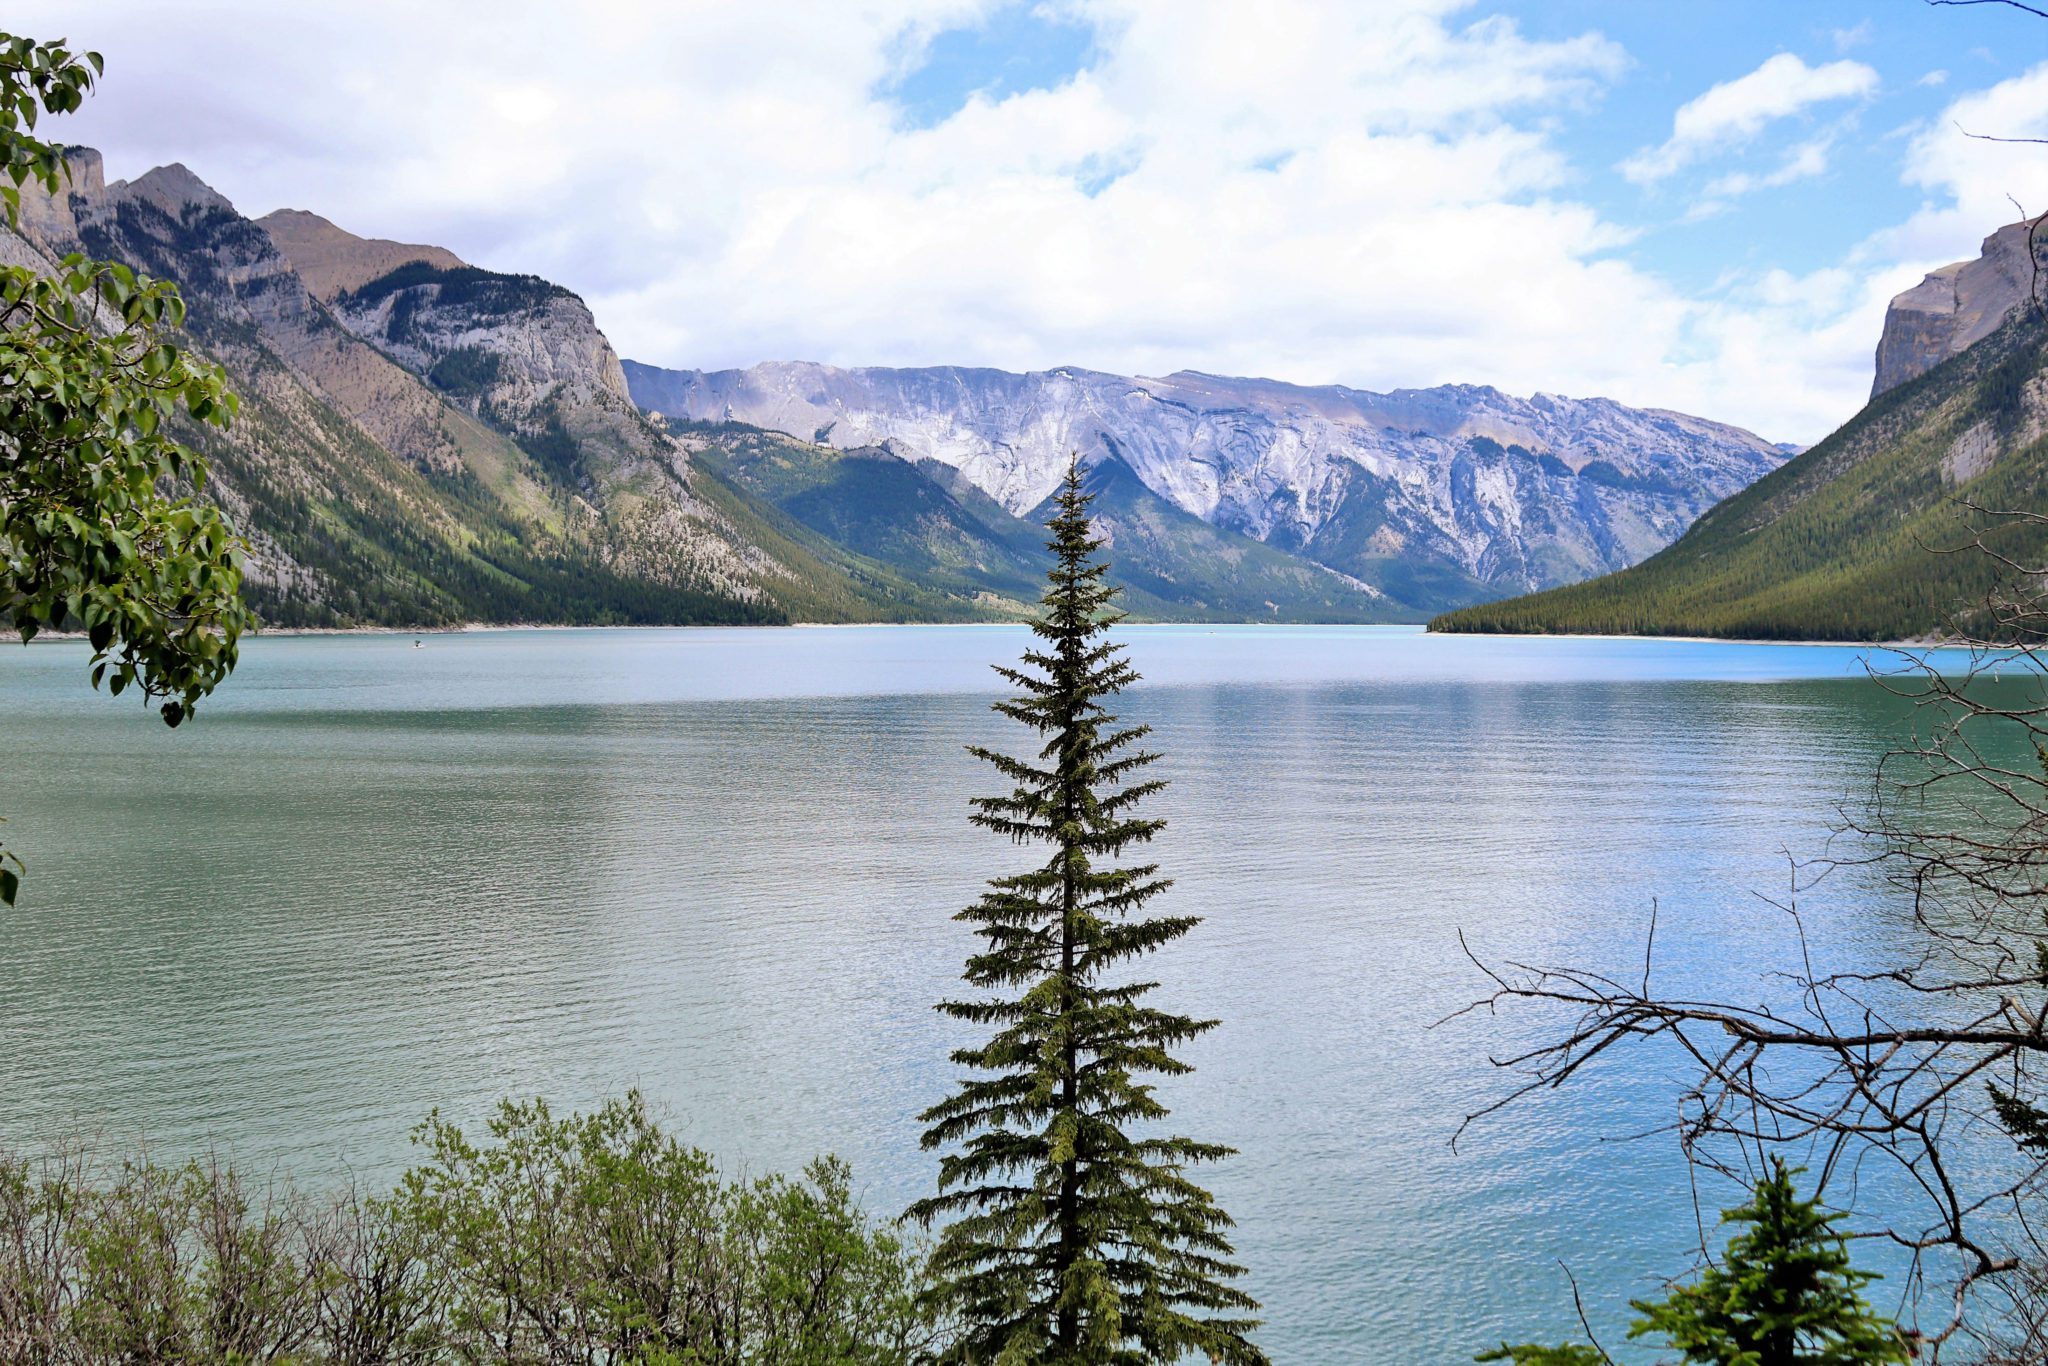  Banff Photography Guide: 15 Amazing Spots to take Photos in Banff | Lake Minnewaka #banff #canada #simplywander #lakeminnewaka